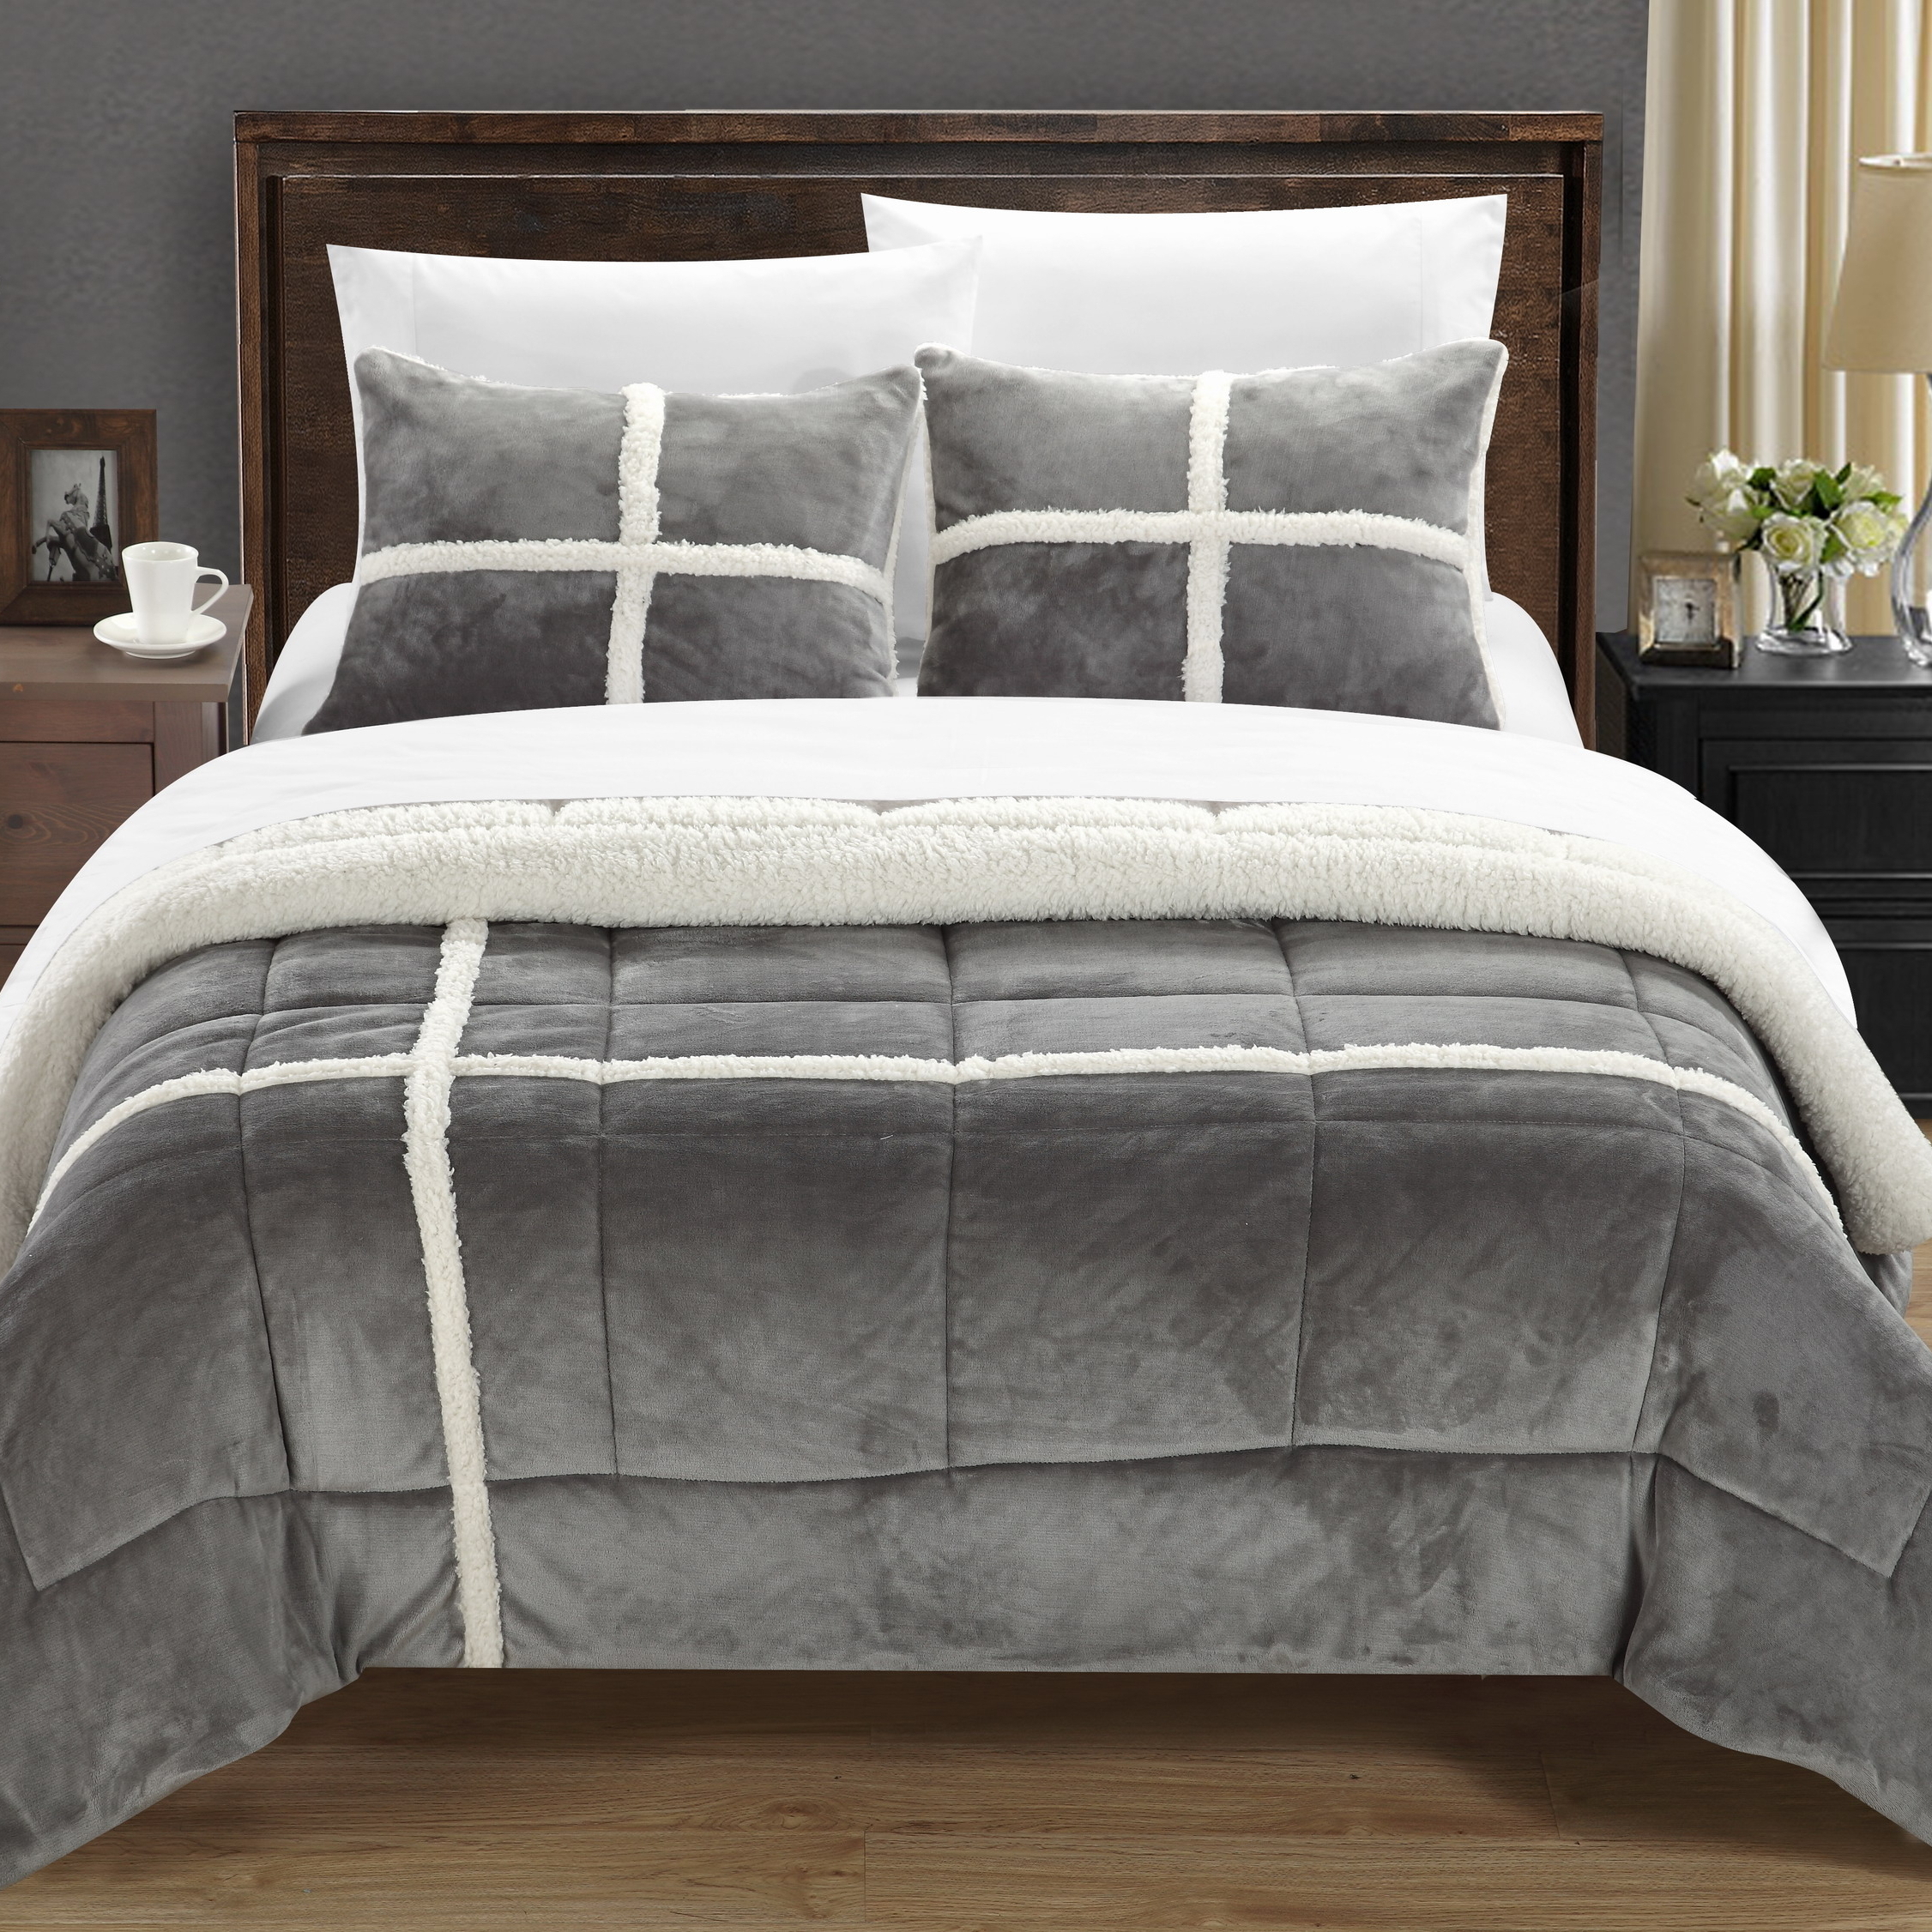 Chloe 3 Or 2 Piece Comforter Set Ultra Plush Micro Mink Sherpa Lined Bedding â Decorative Pillow Shams Included - Silver, Queen - 3 Piece